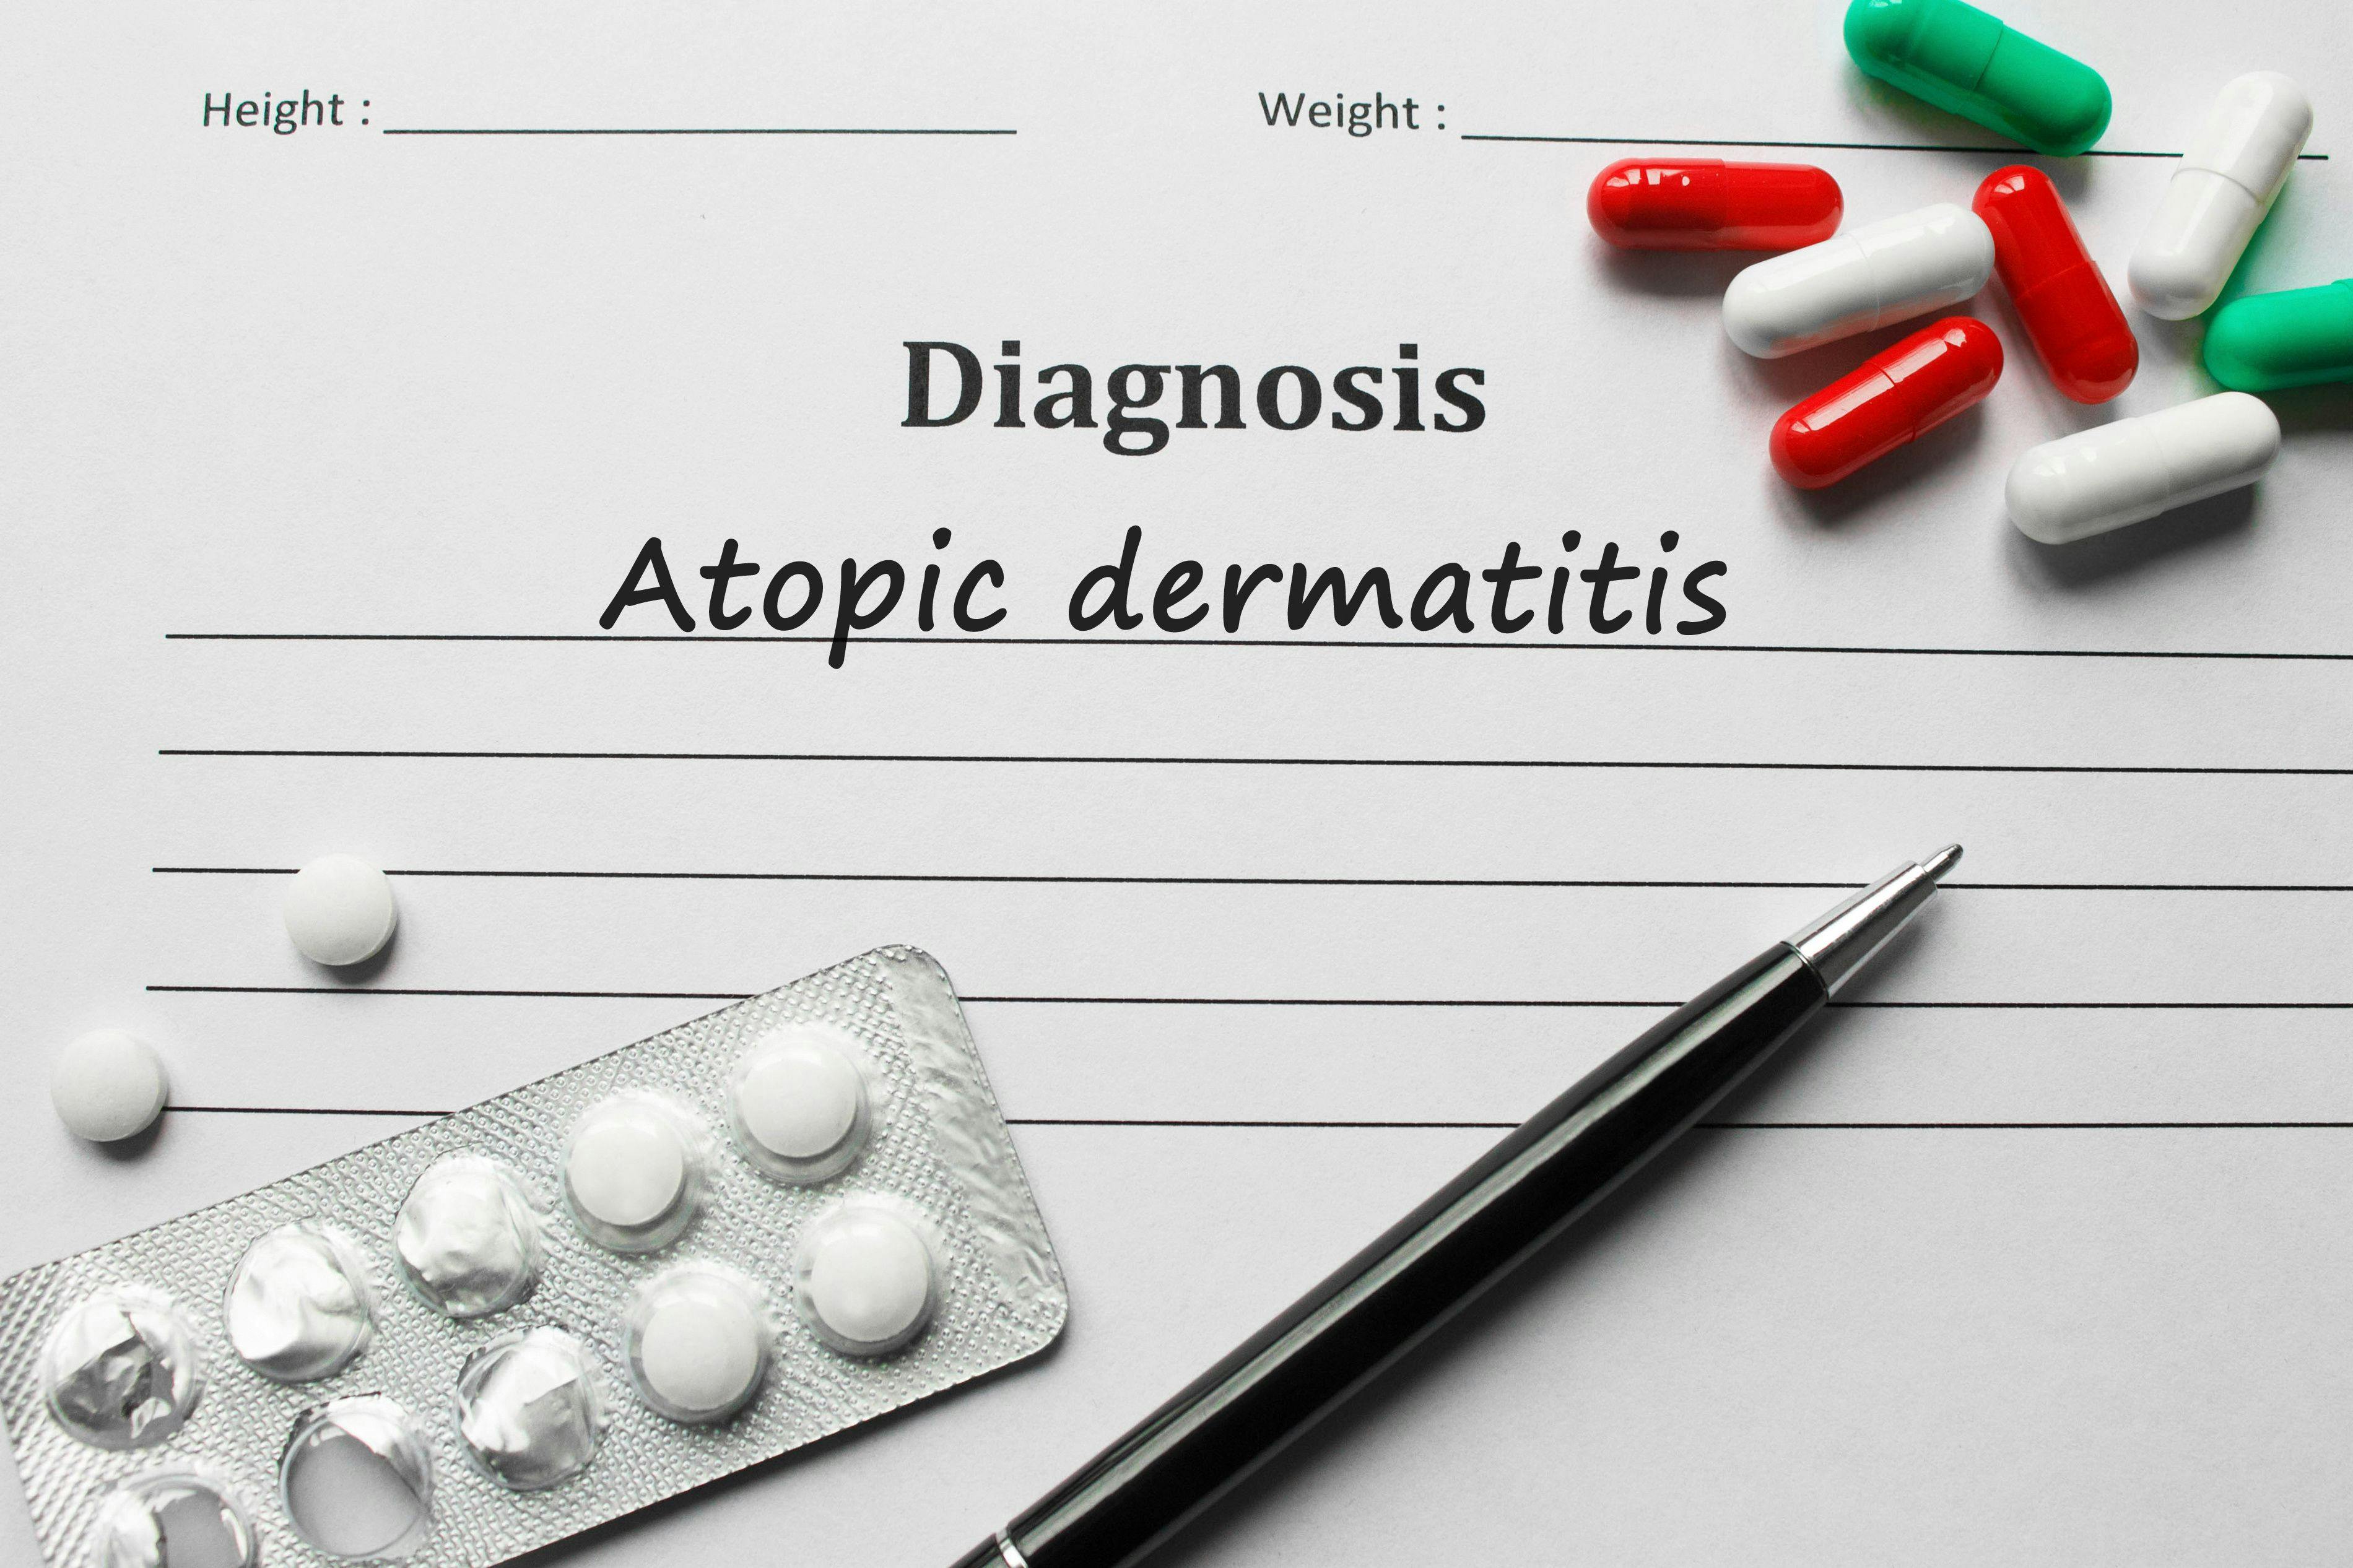 Tapinarof Cream 1% Shows Positive Topline Results for Treatment of Pediatric Atopic Dermatitis